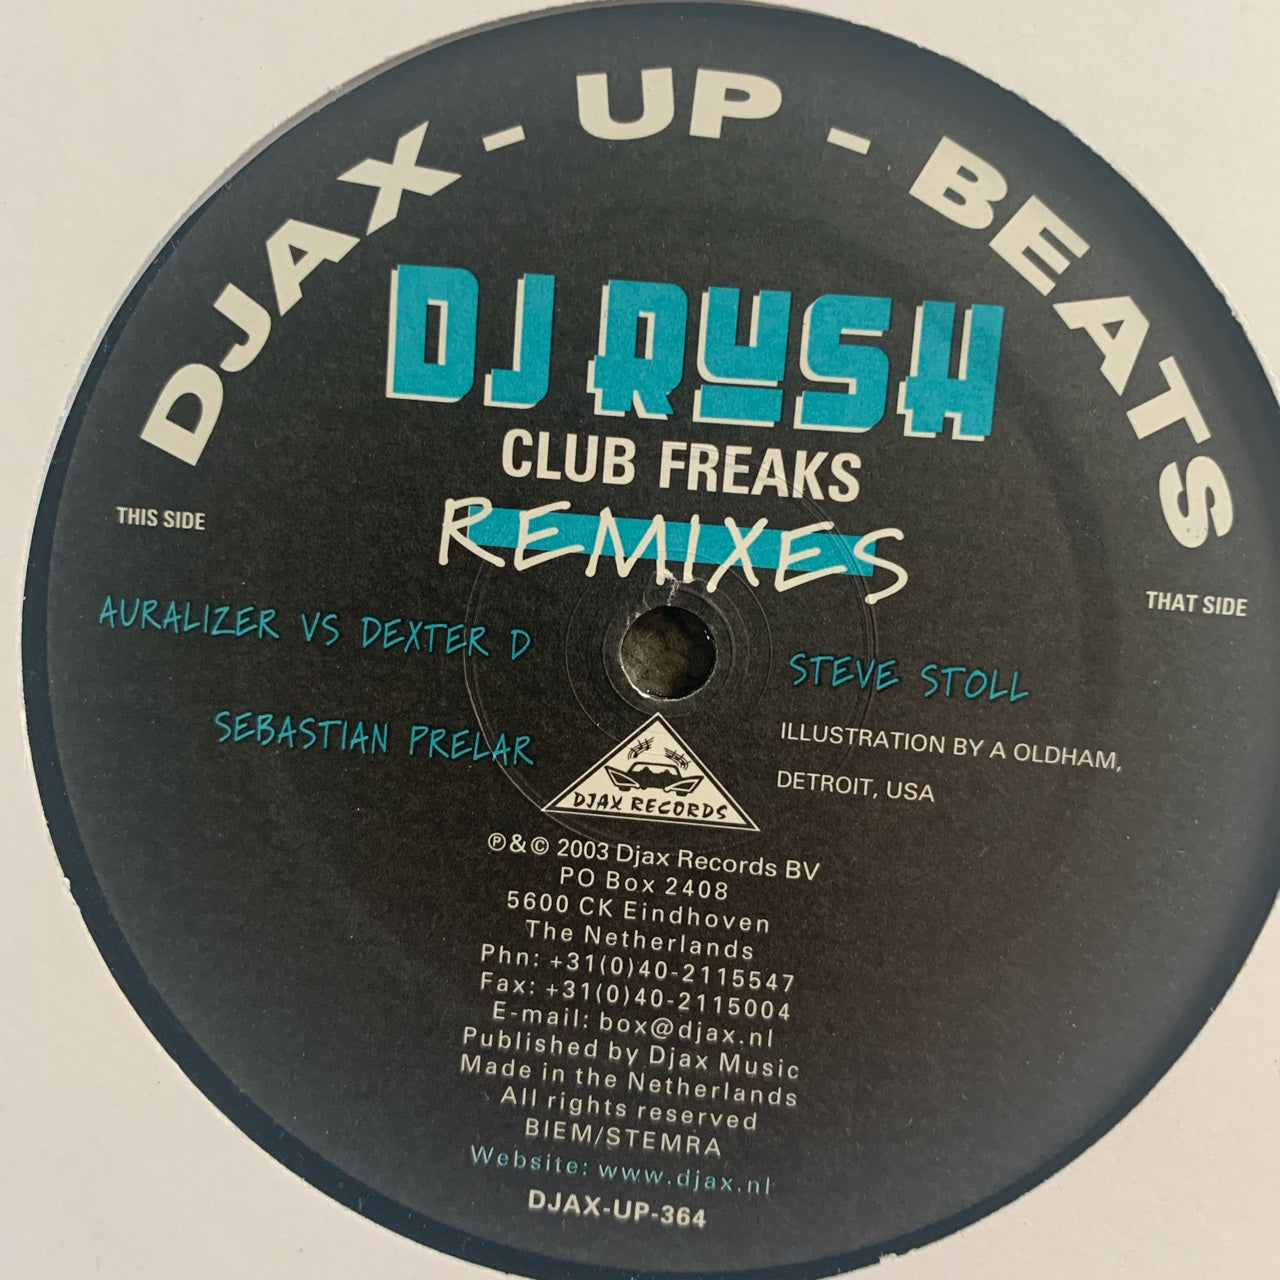 DJ RUSH ‘Club Freaks Remixes EP’